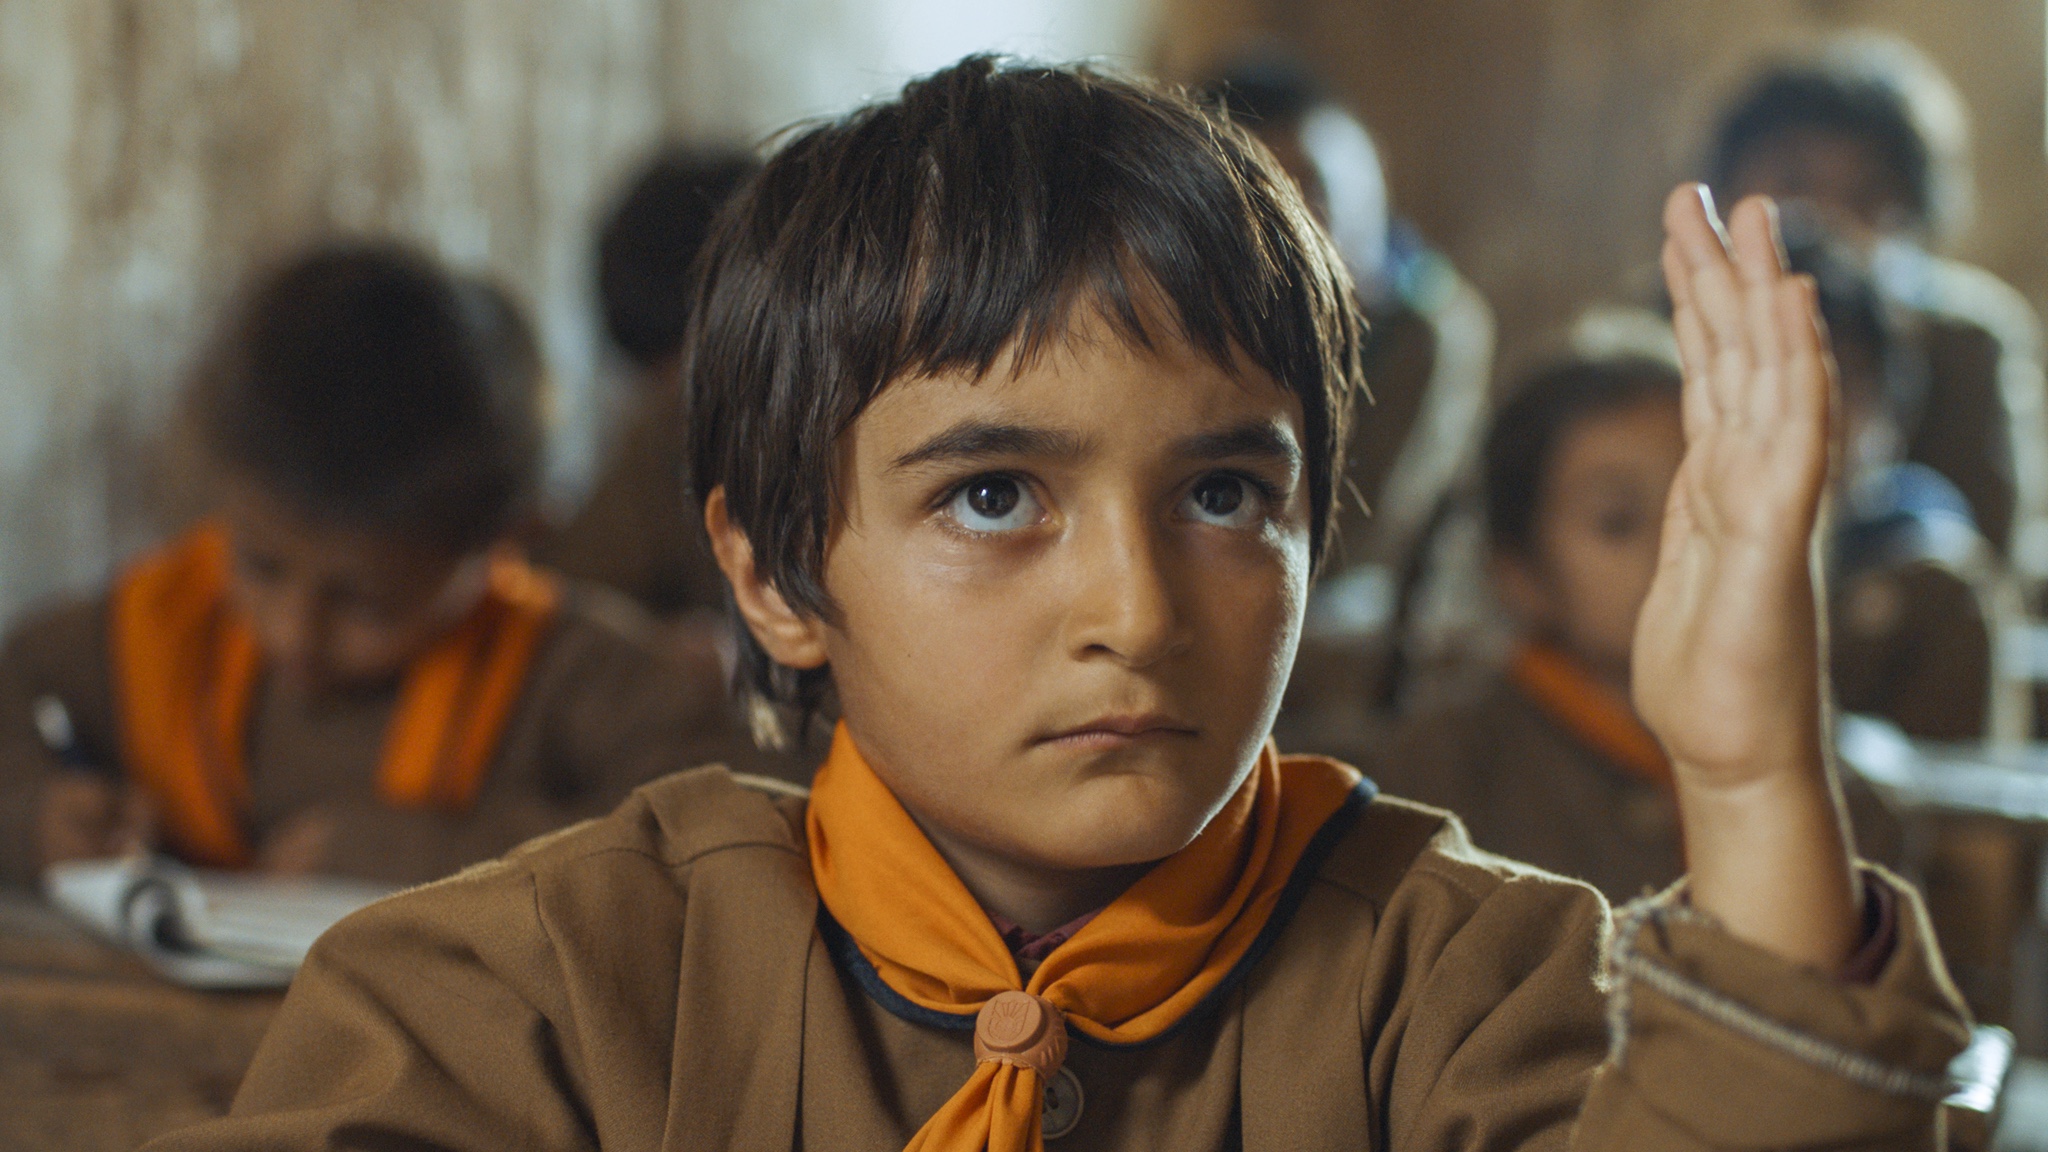 Syrian schoolchild